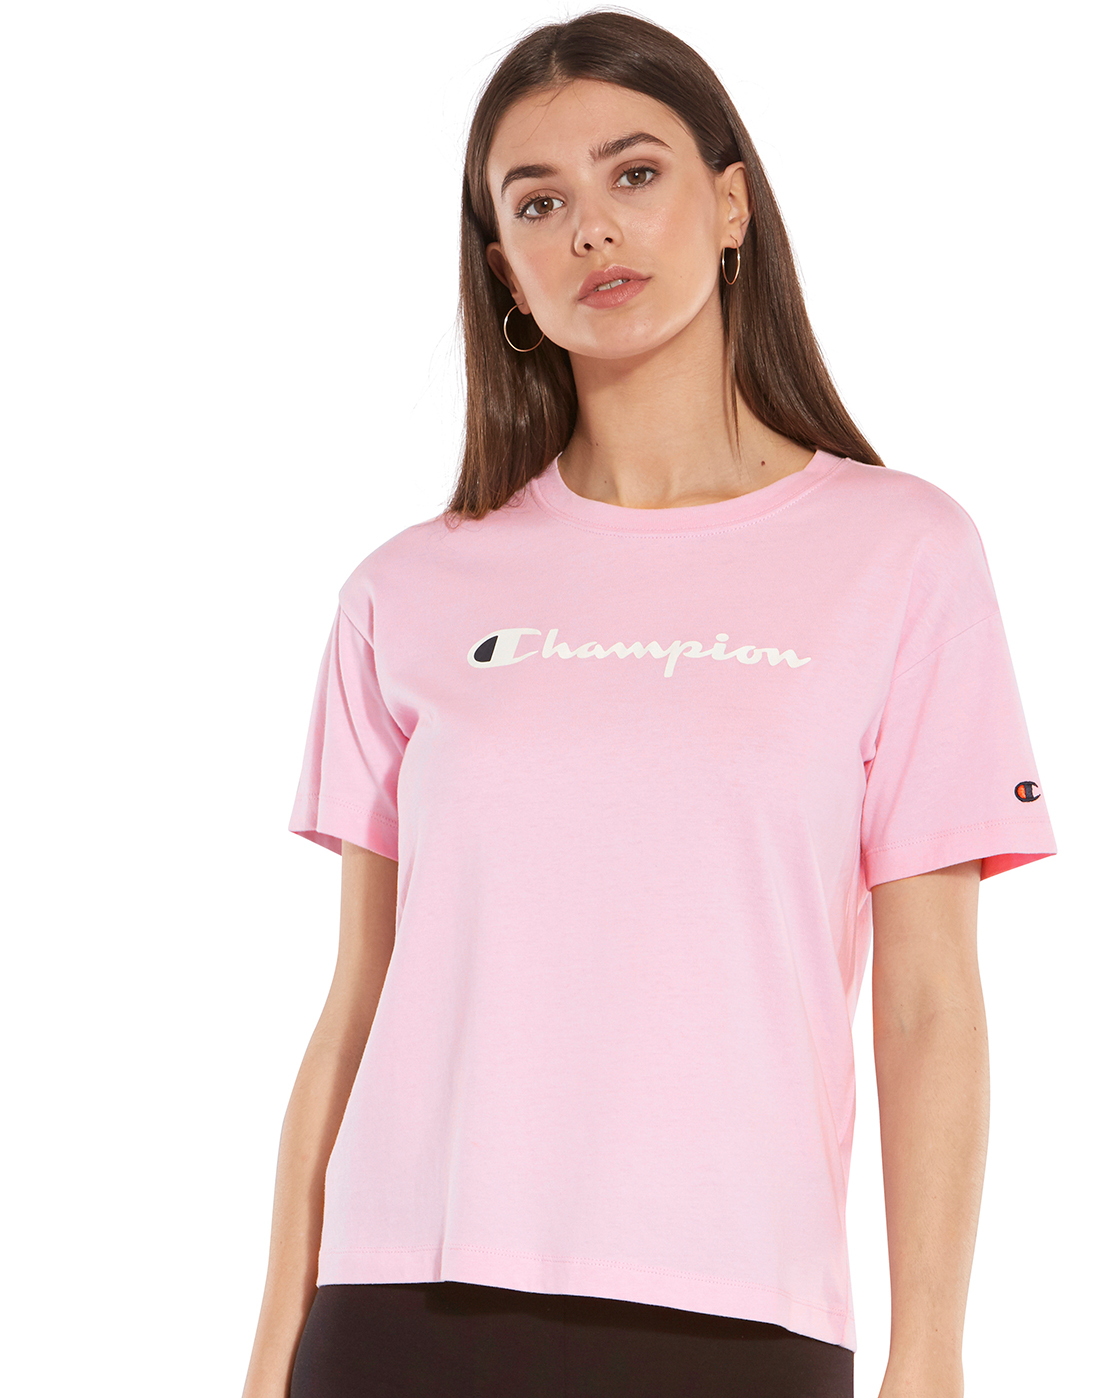 pink champion t shirt women's